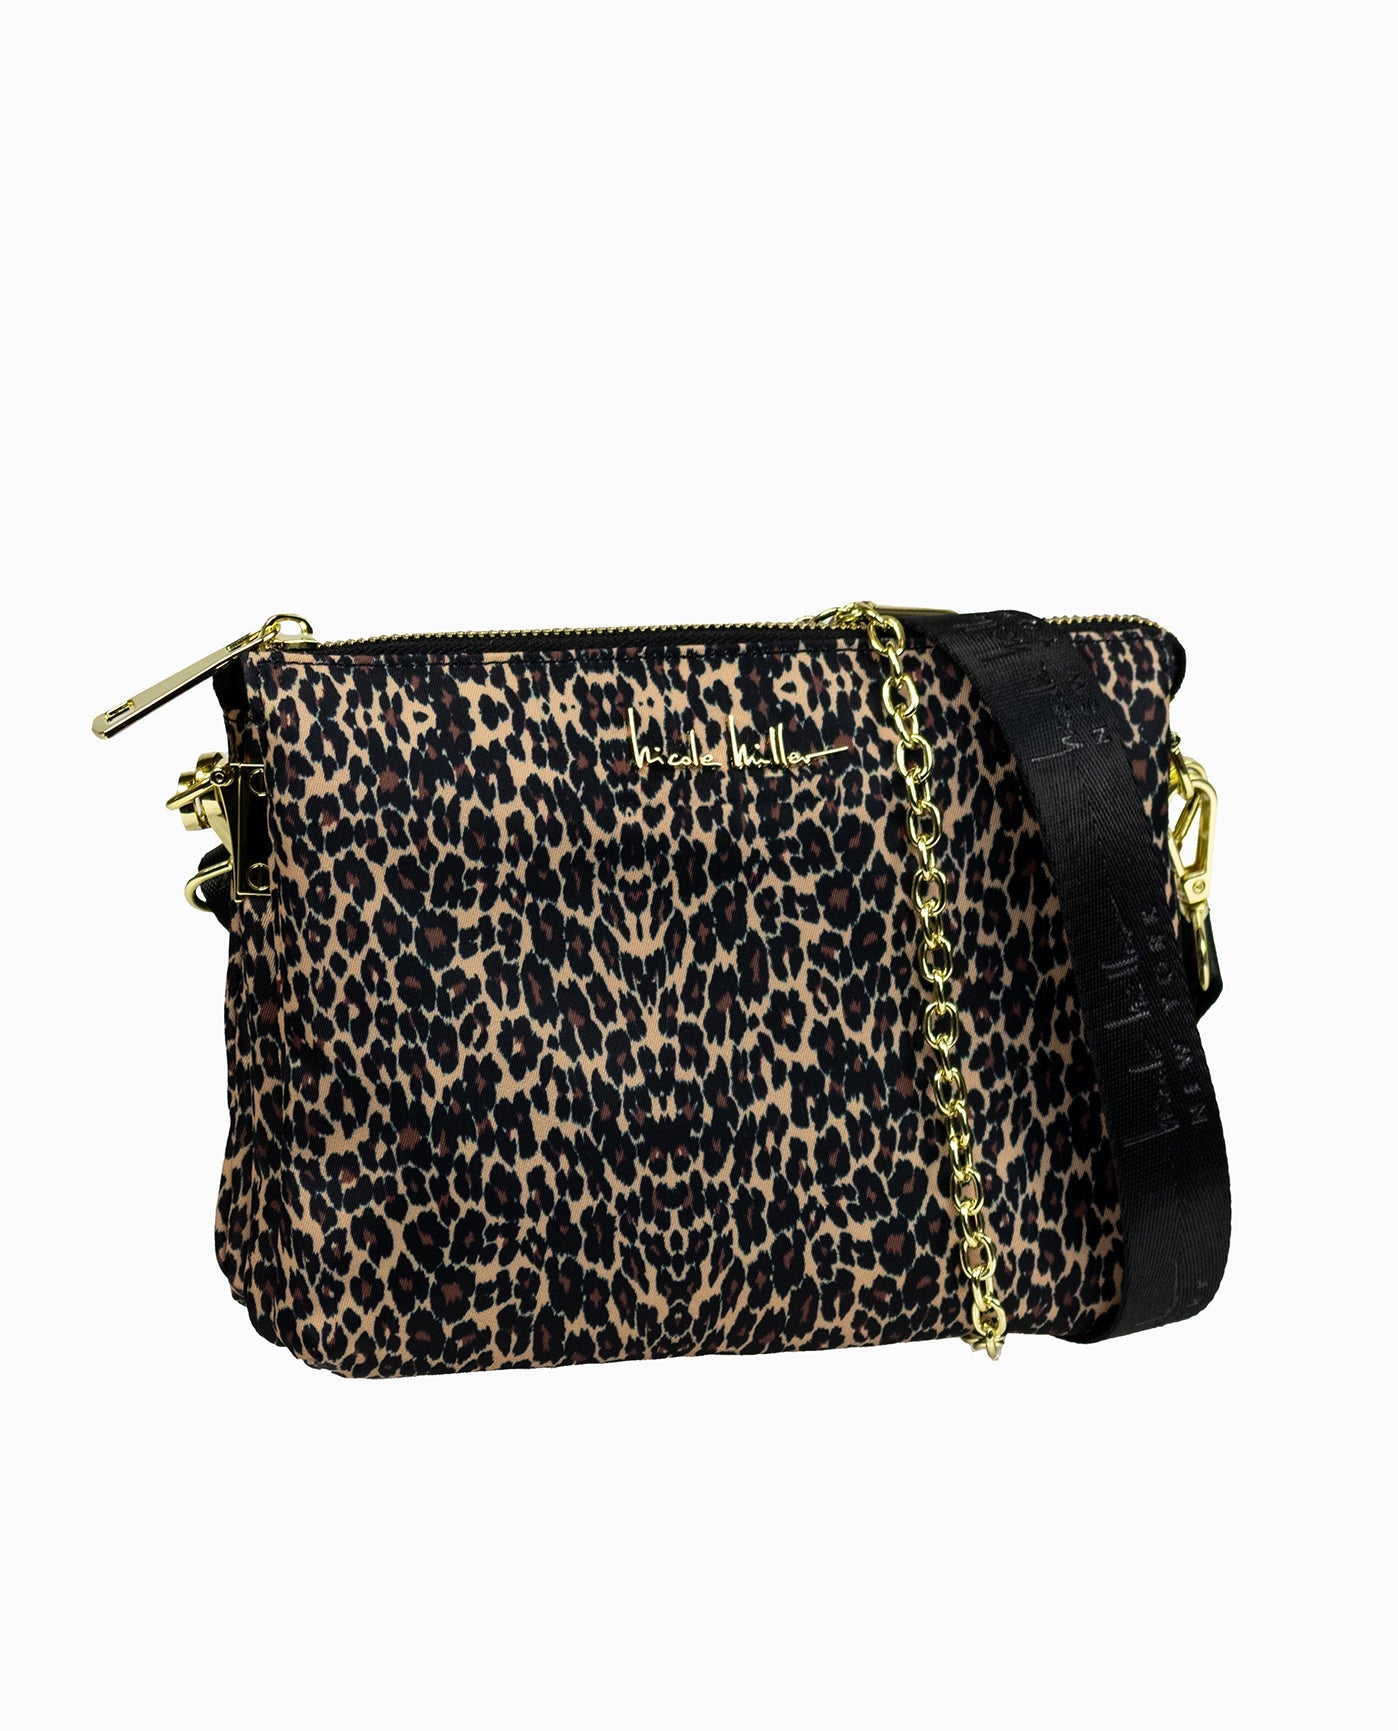 Nicole Miller Quilted Nylon Crossbody Bag Os / Leopard Black Accessories Handbags